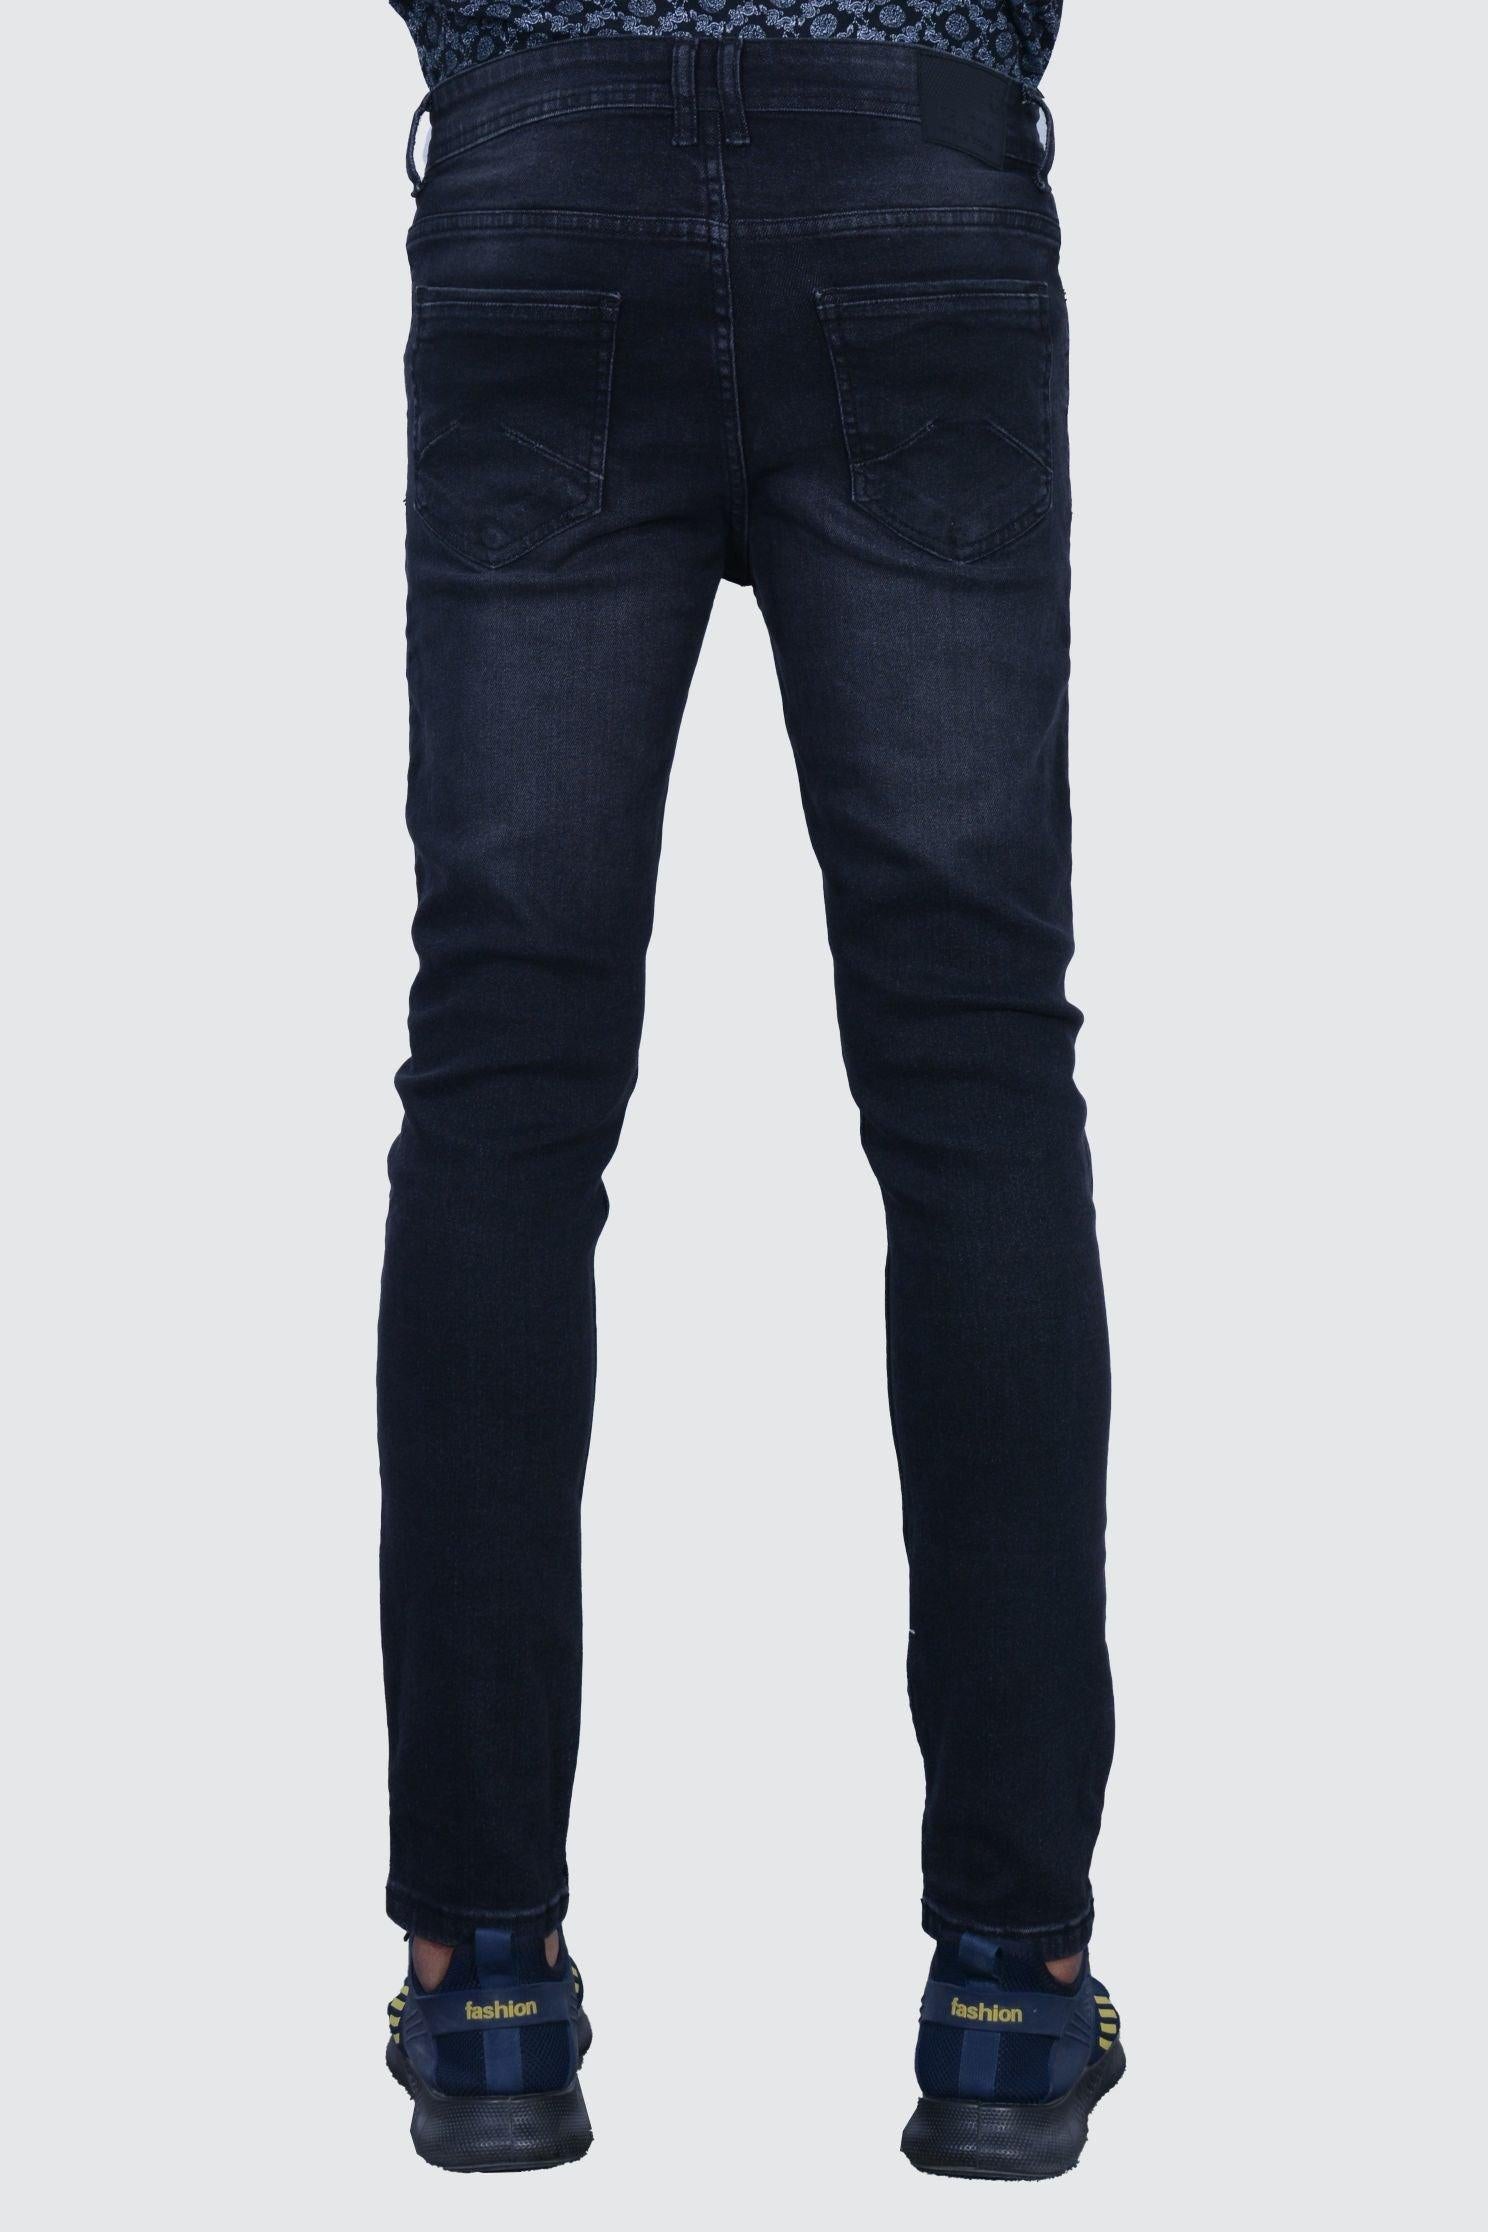 denim jeans -122205 - Italiano.pk